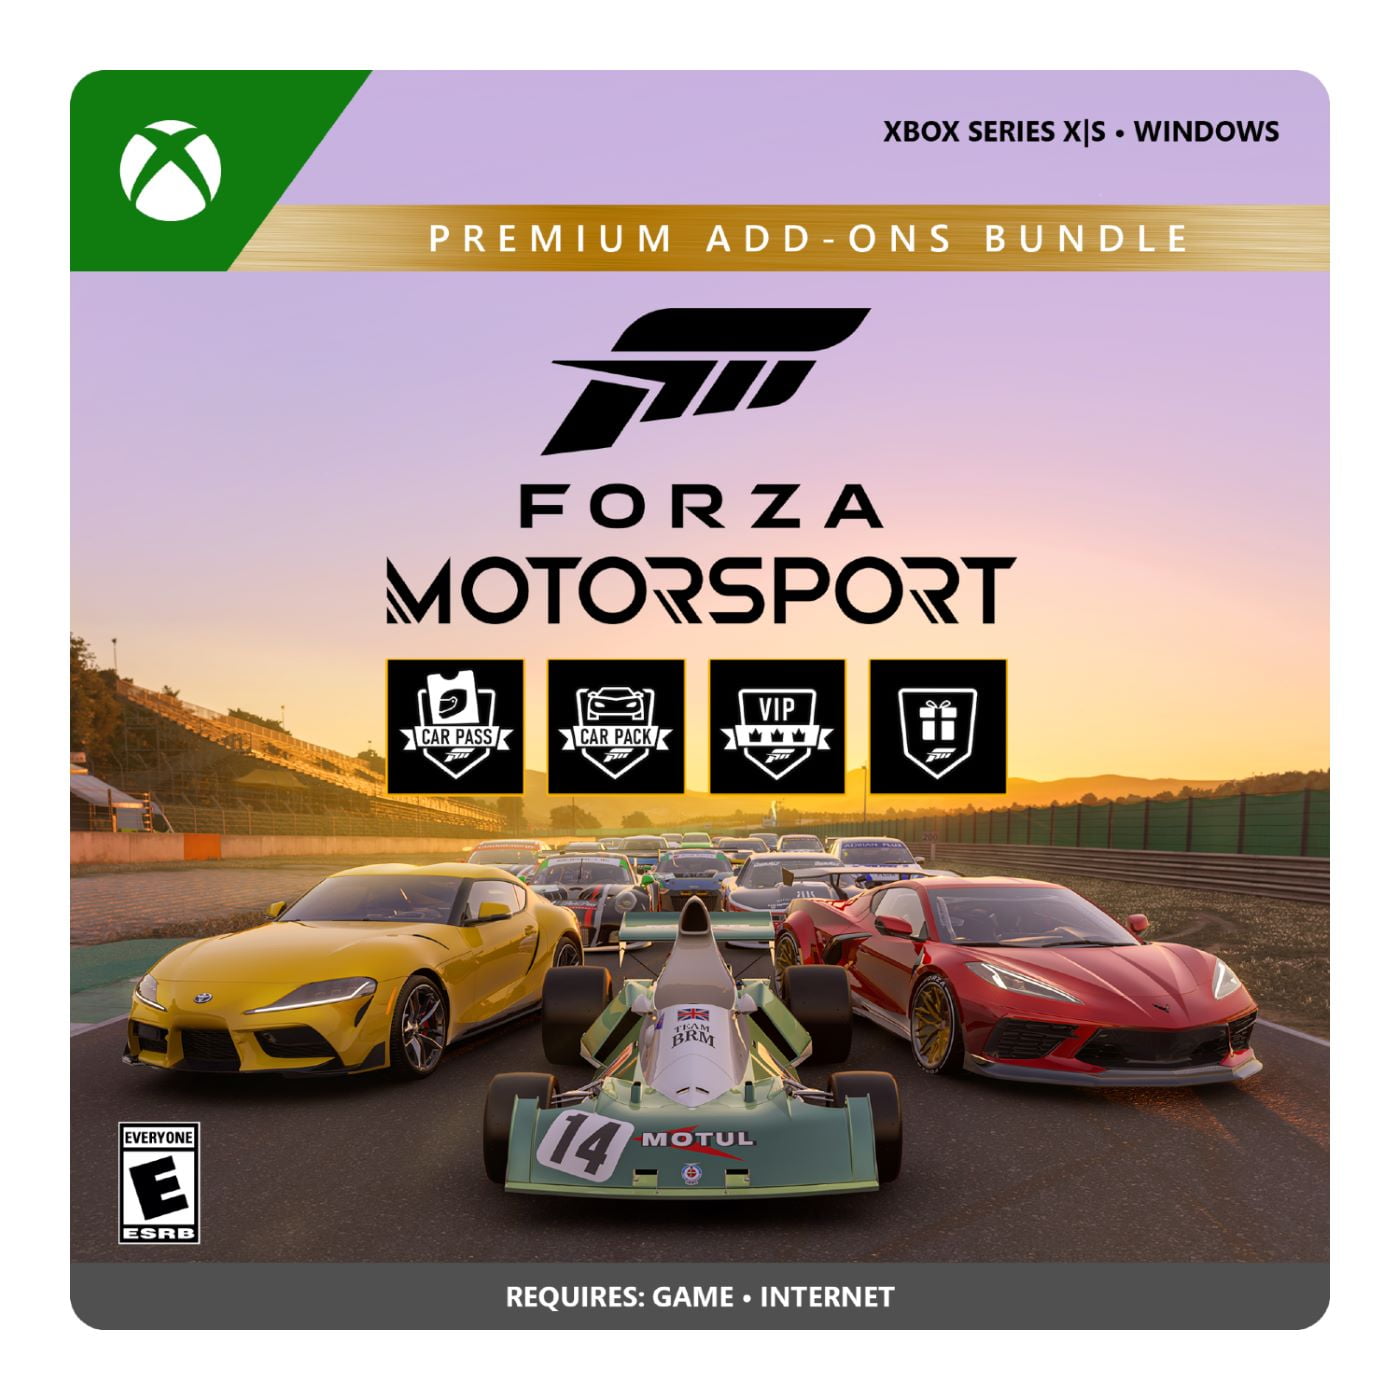 Forza Horizon 5 - Premium Edition (Windows PC or Xbox One / Series X|S  Download Code)